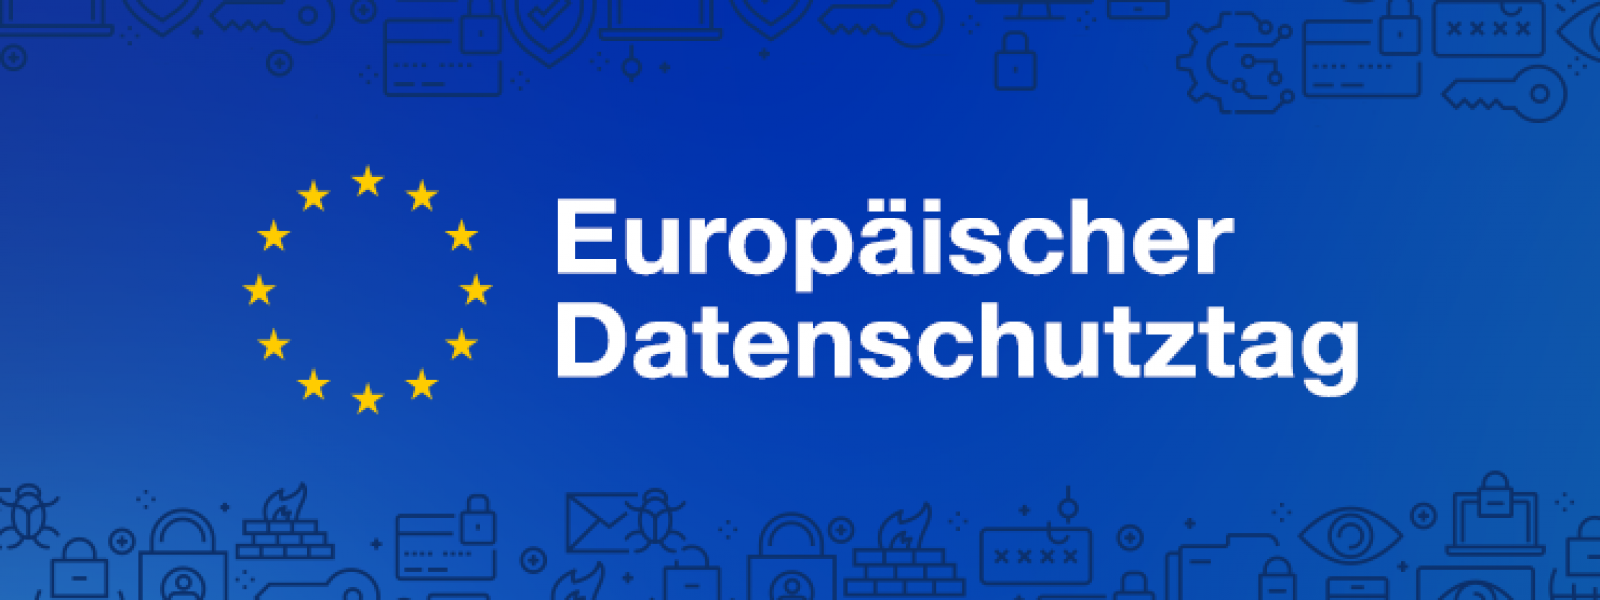 Europäischer Datenschutztag 2021